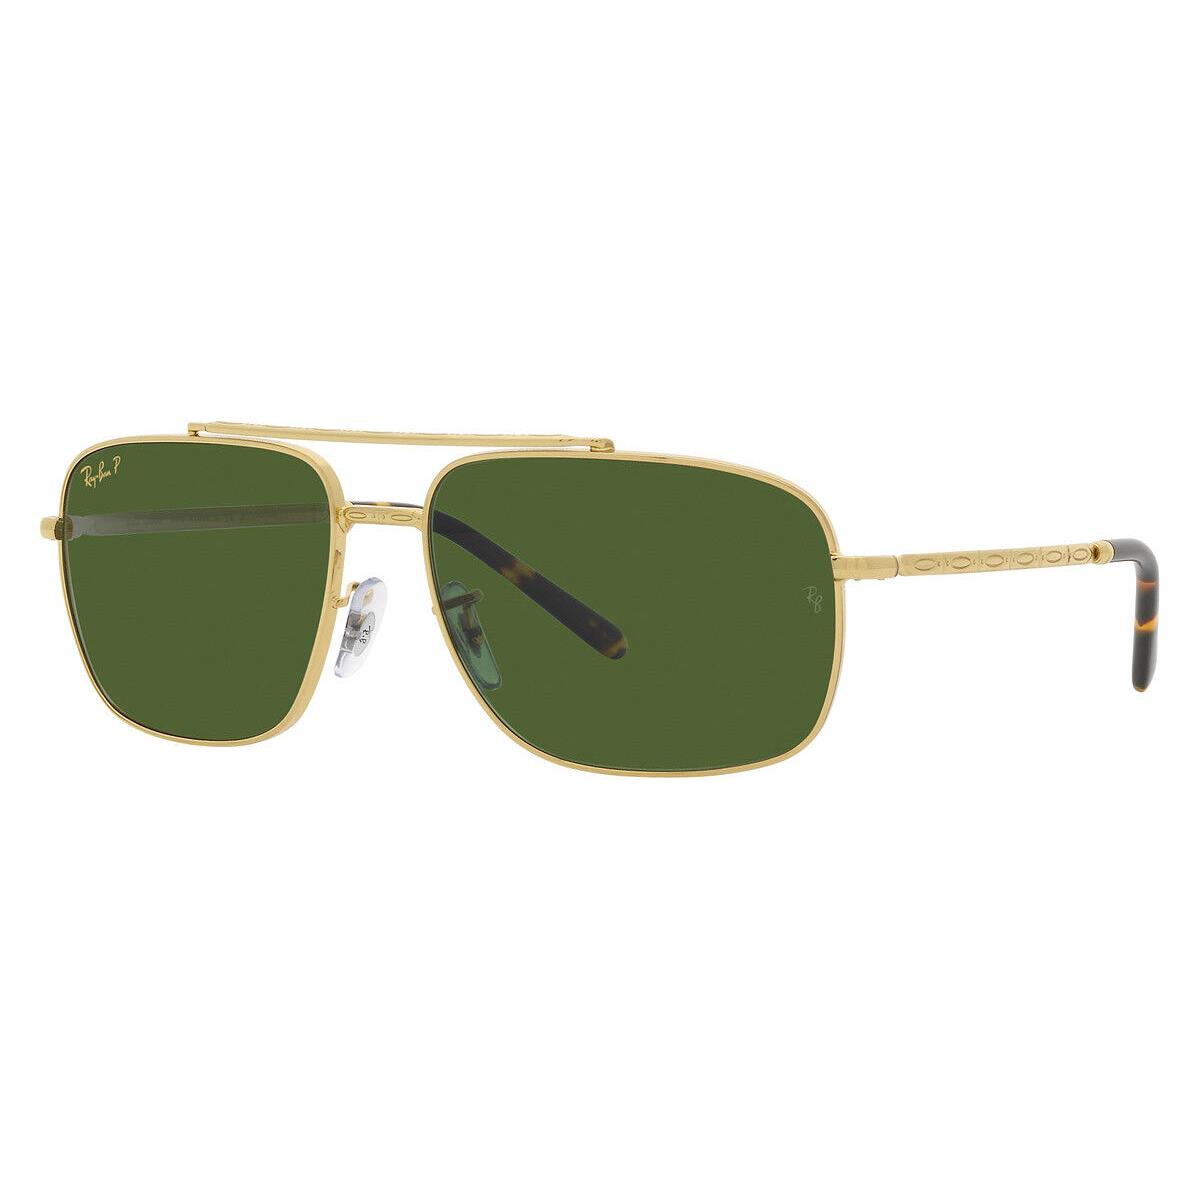 Ray-ban RB3796 Sunglasses Gold Dark Green Polarized 59mm - Frame: Gold / Dark Green Polarized, Lens: Dark Green Polarized